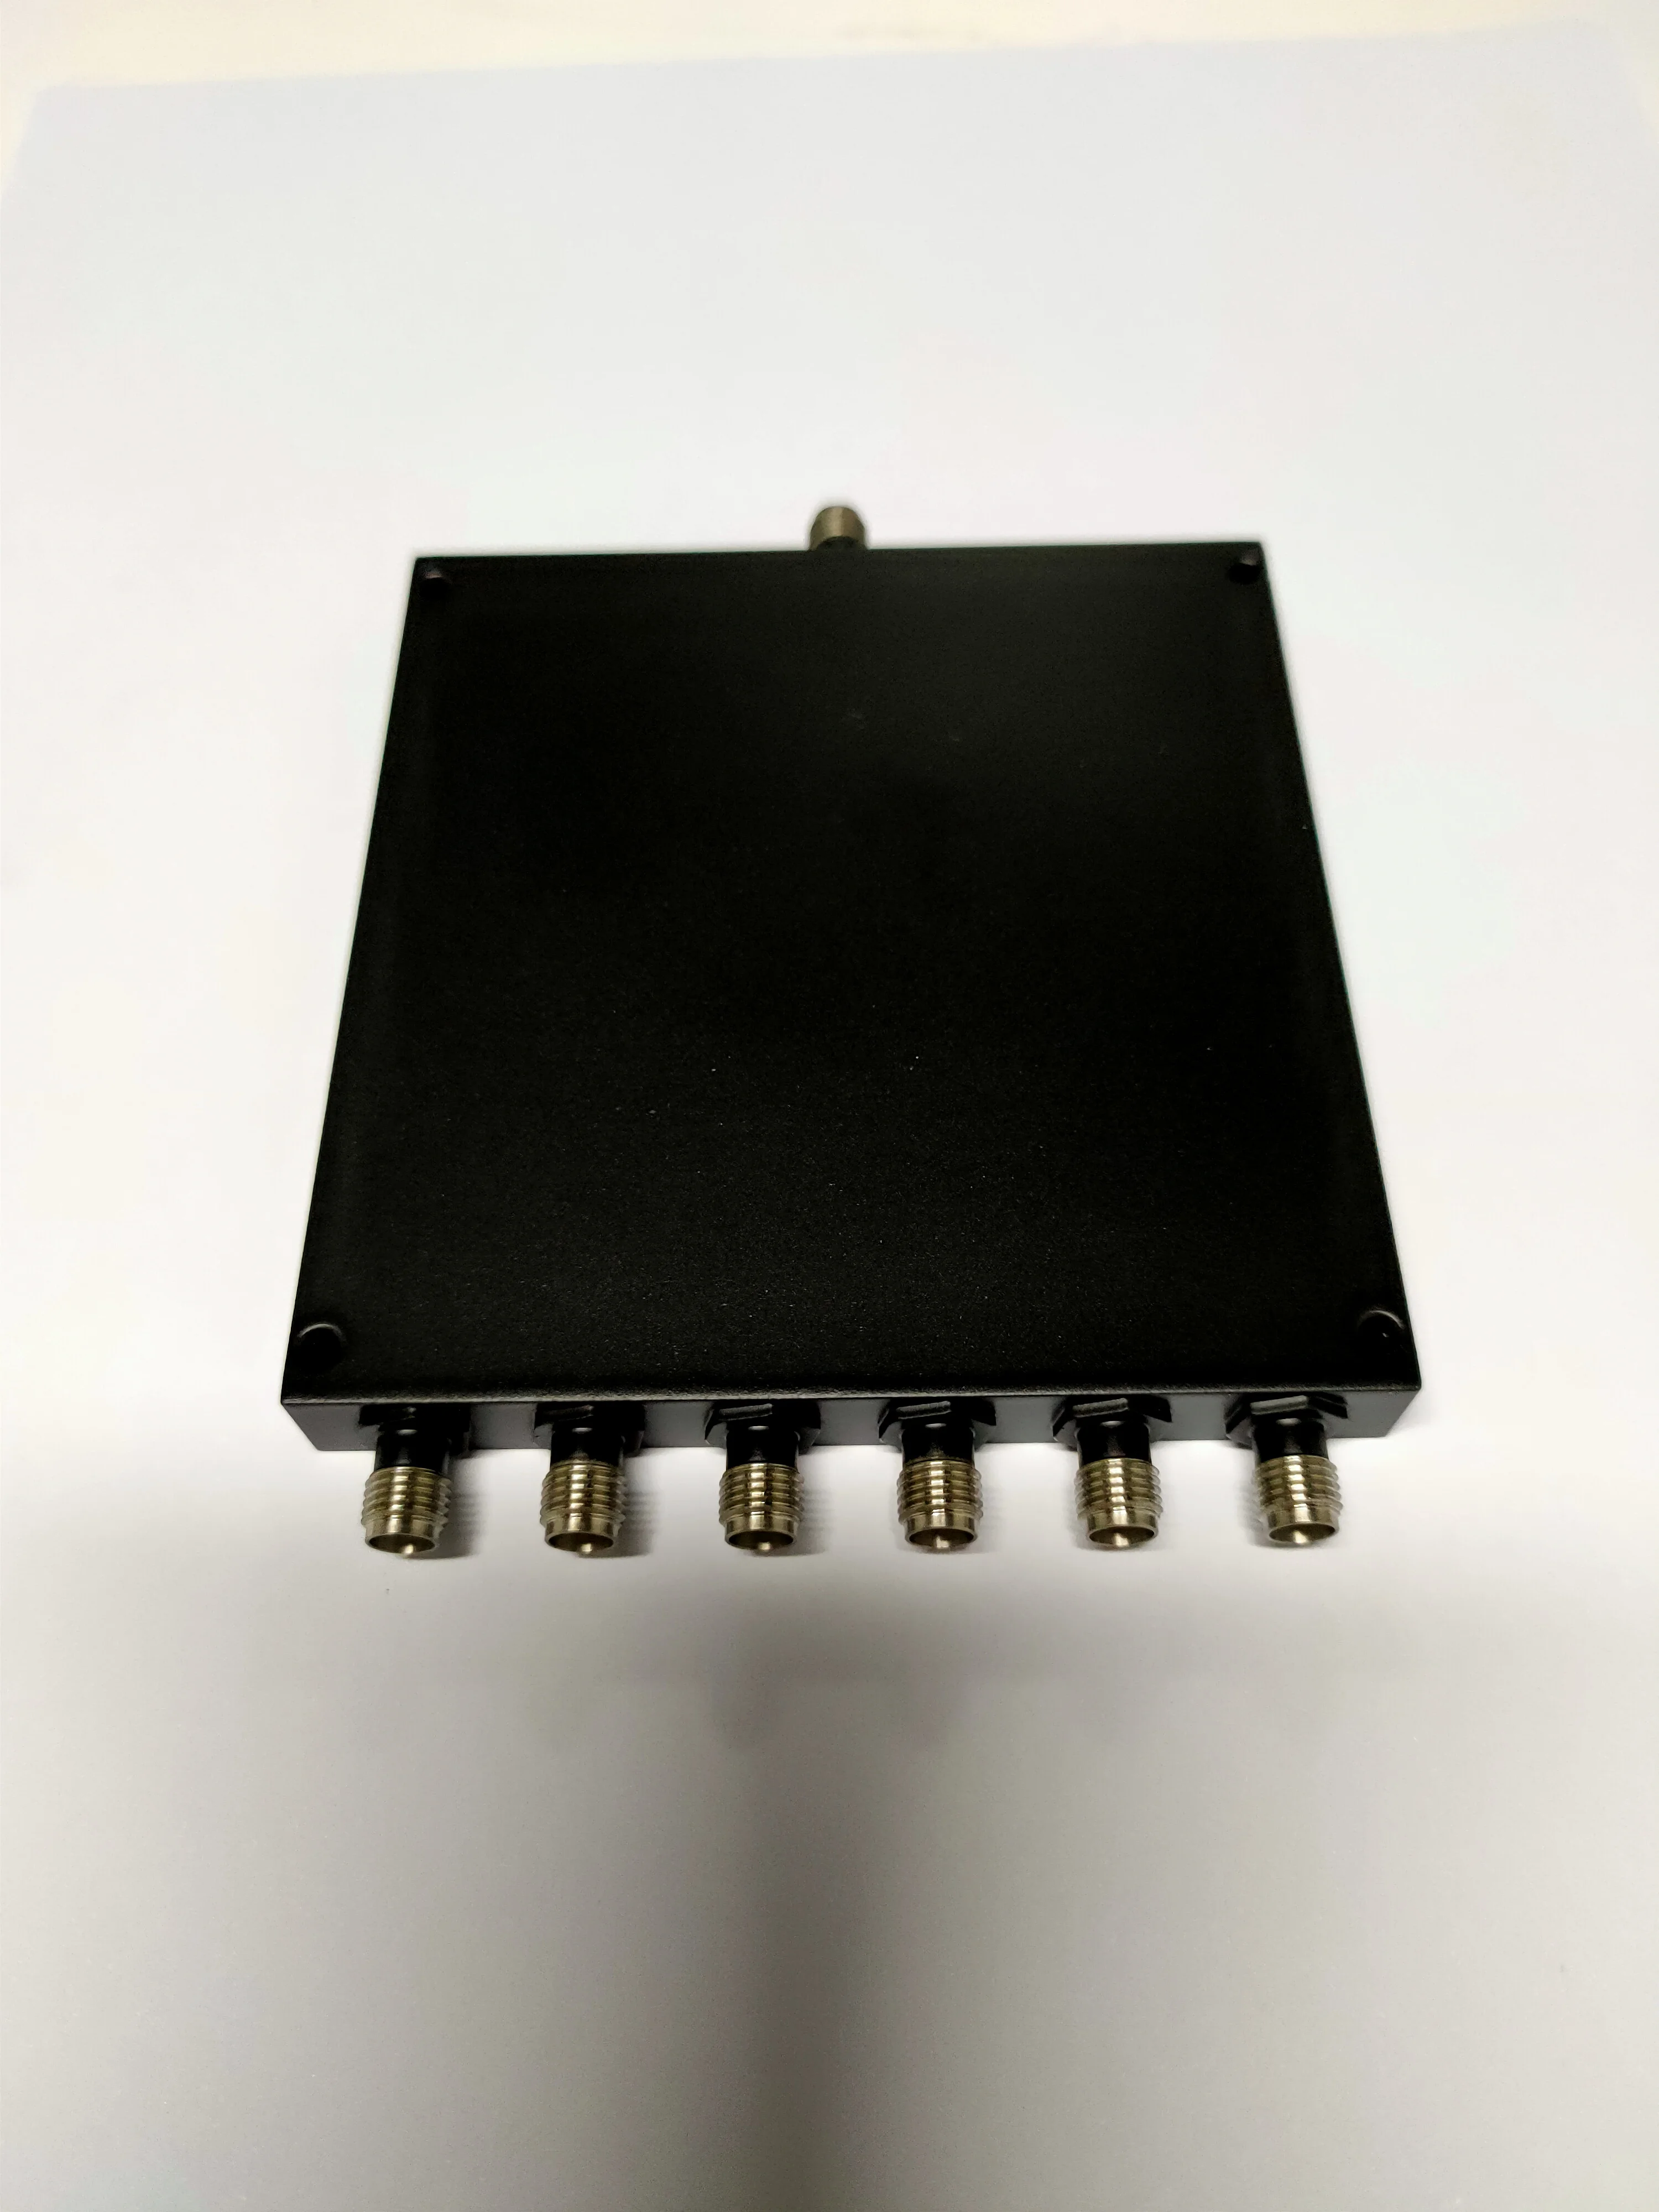 6 ways 2-8 GHz power divider/ splitter SMA Connector for 5G/6G/wifi test